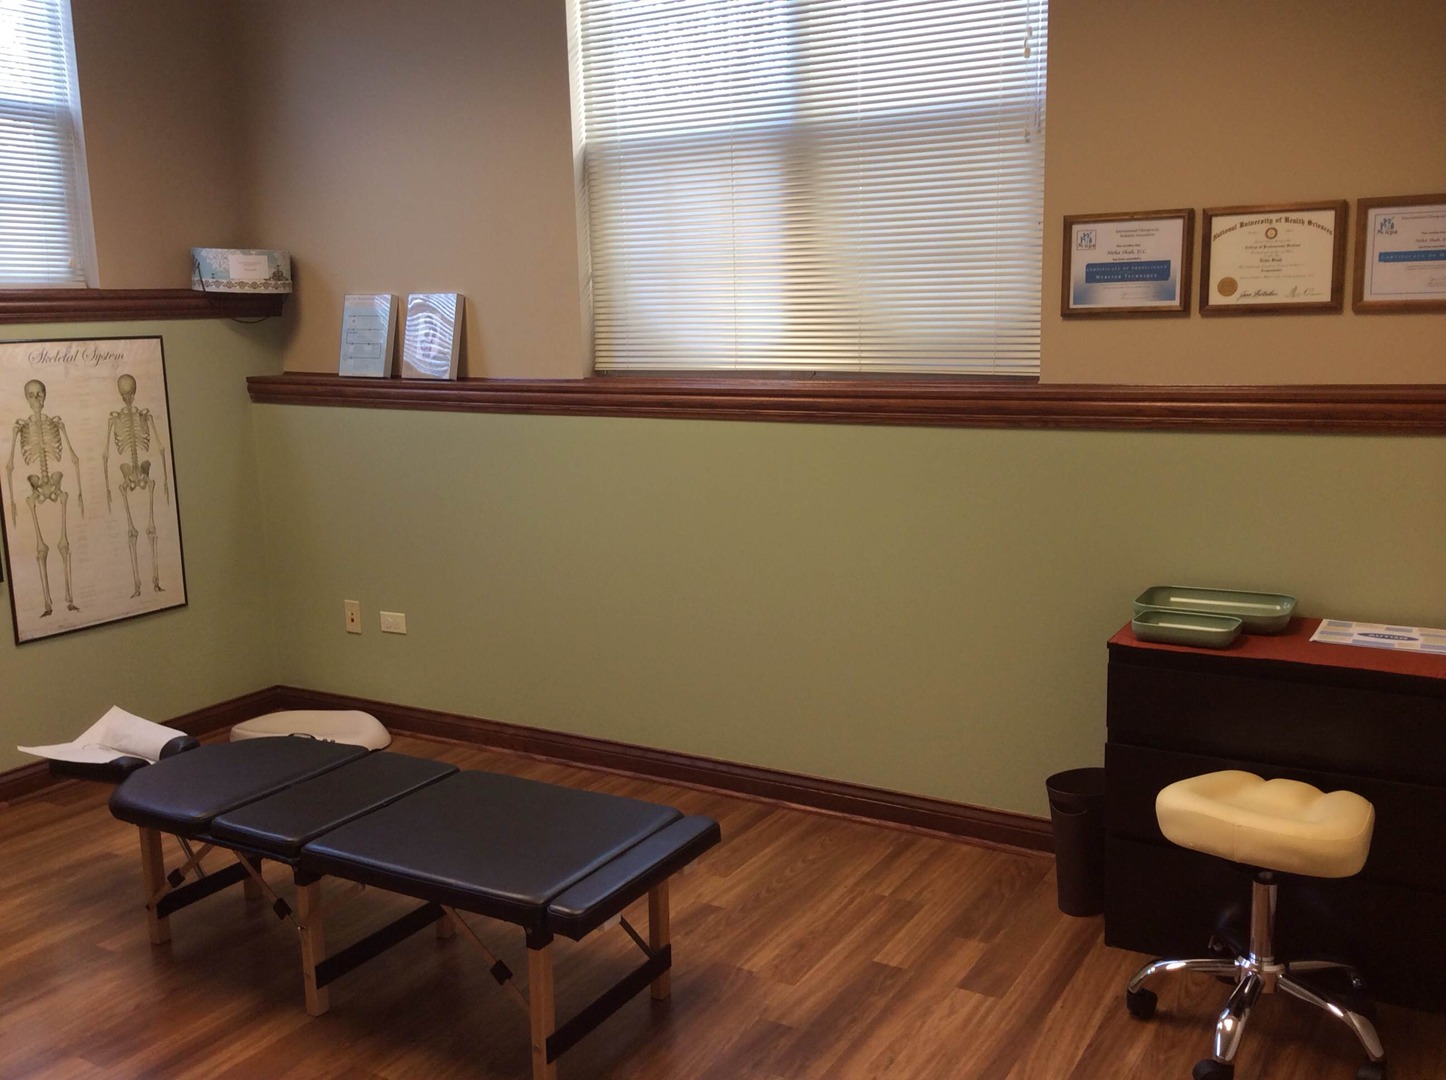 Pediatric chiropractor's room